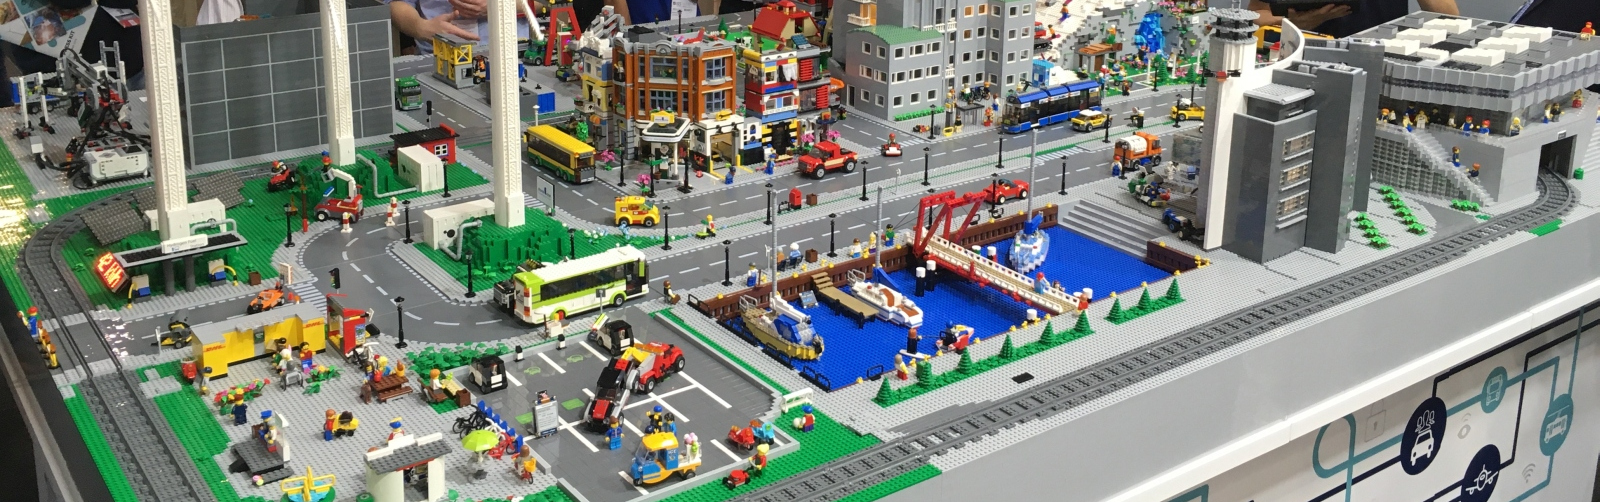 LEGO city by FIWARE